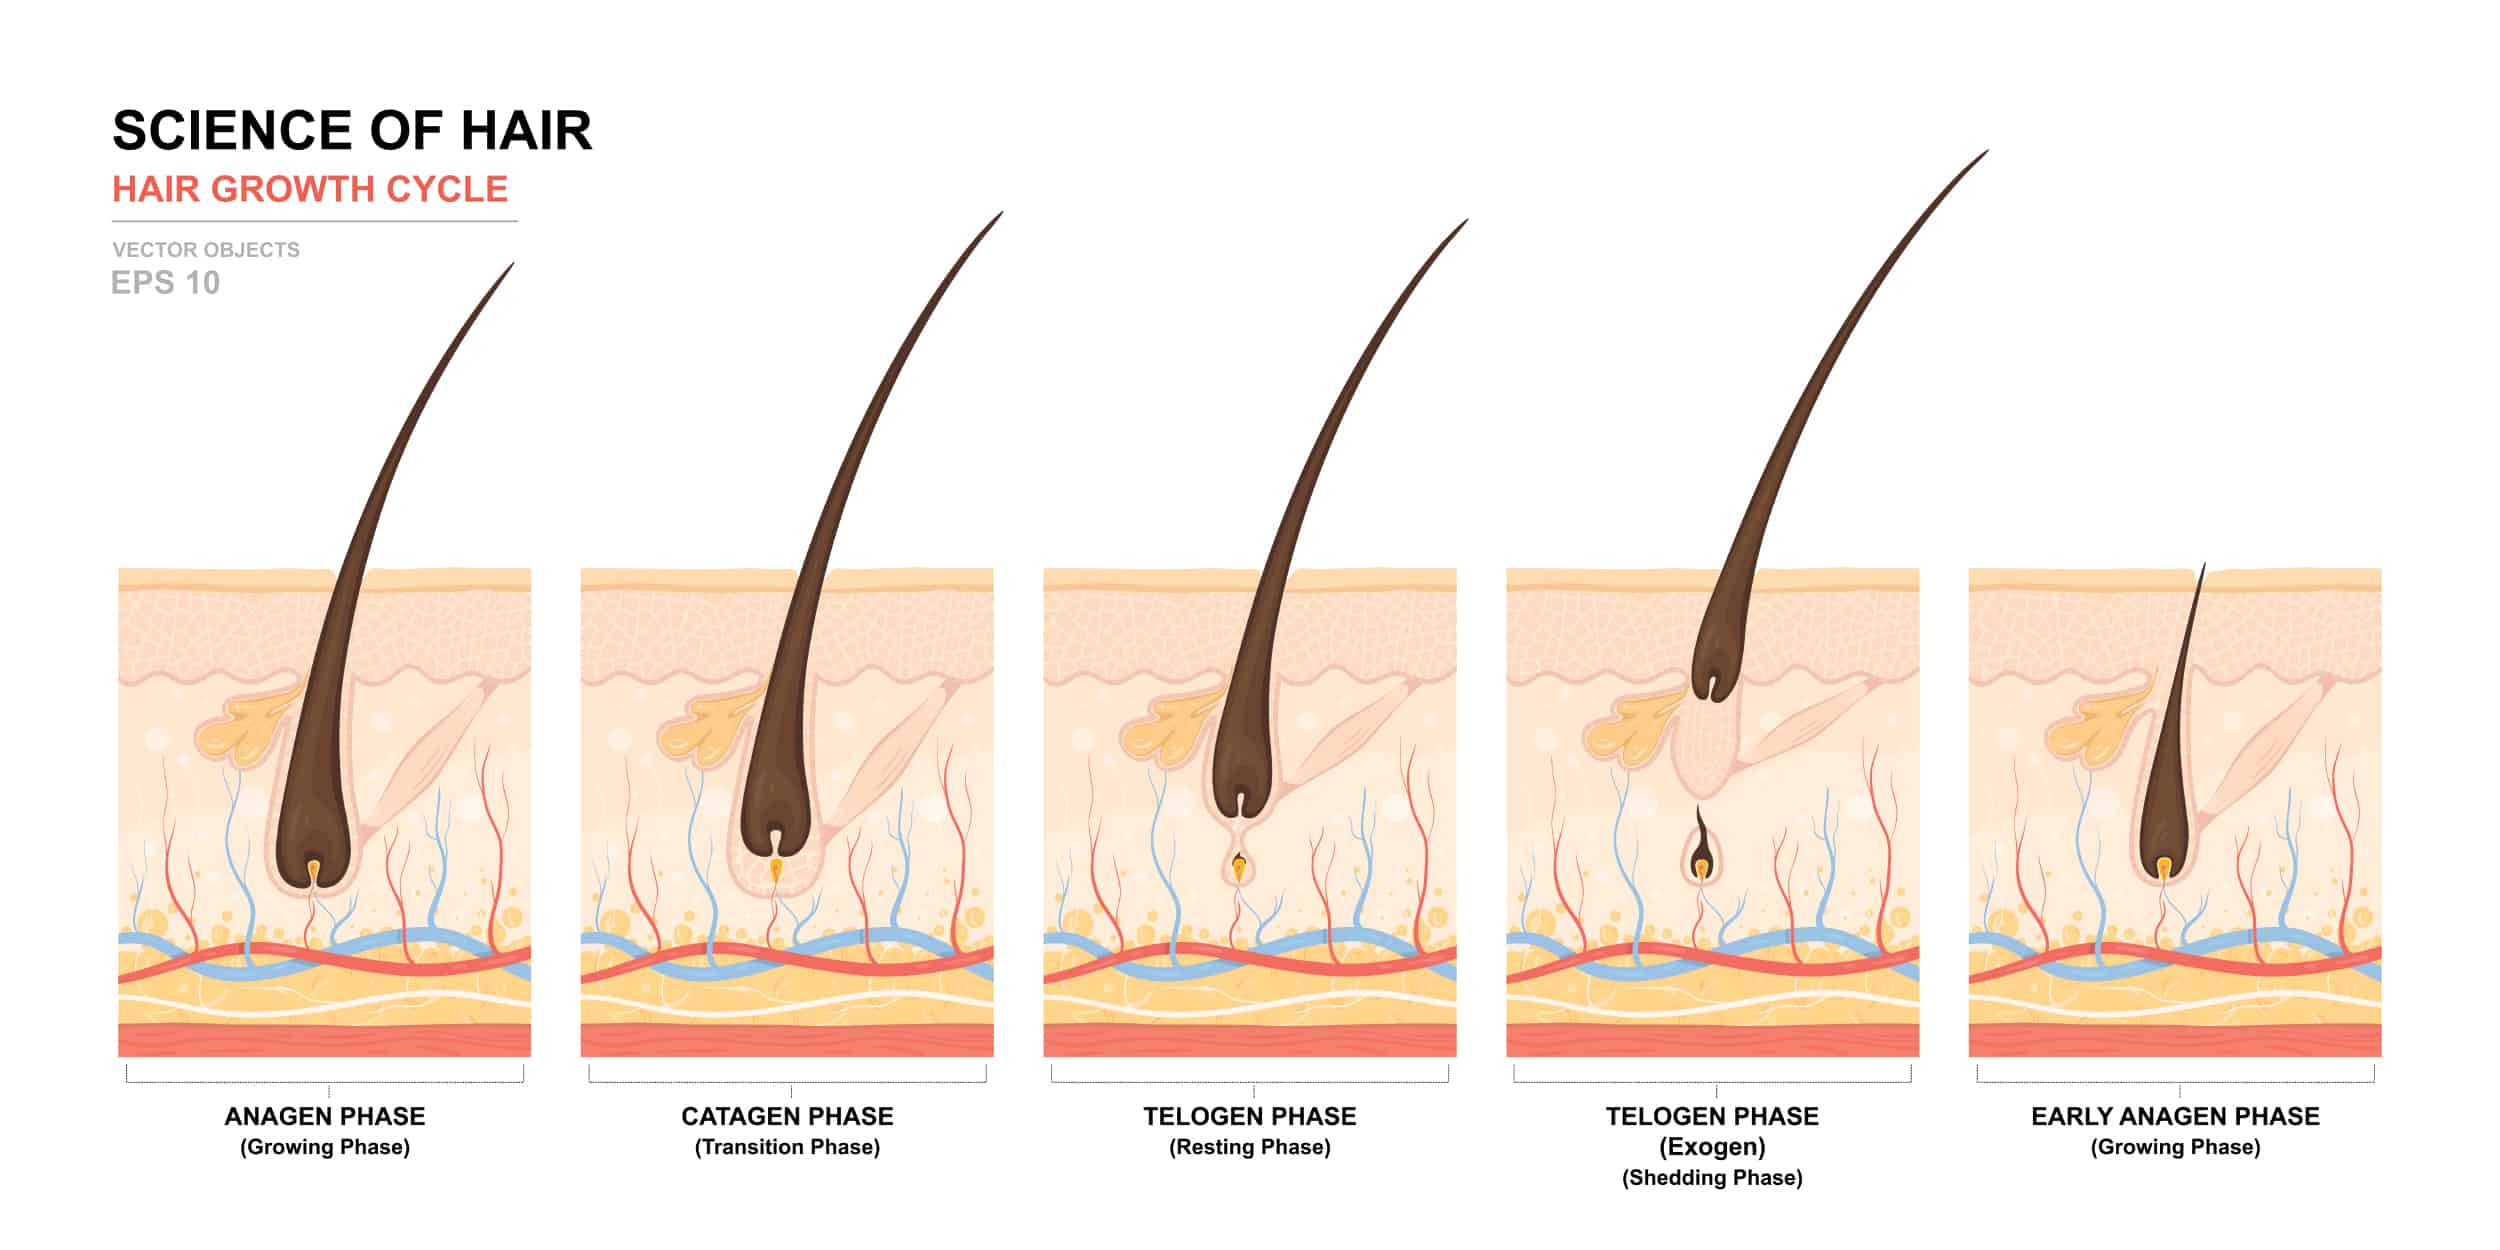 Does shaving stimulate hair growth?